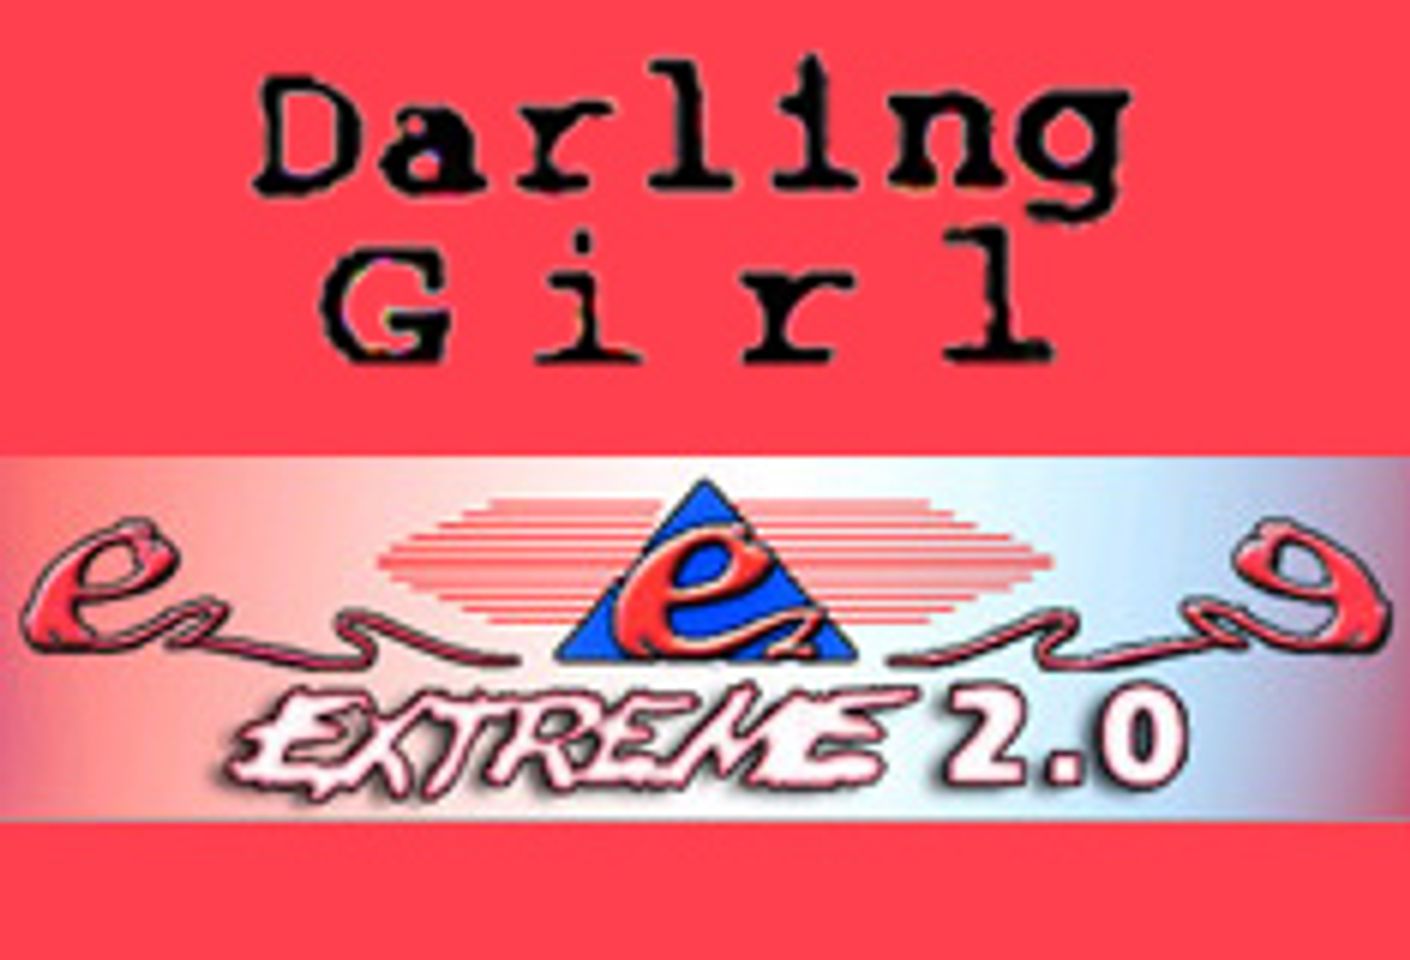 Nancy Levine Joins Sales Teams for Extreme, Darling Girls